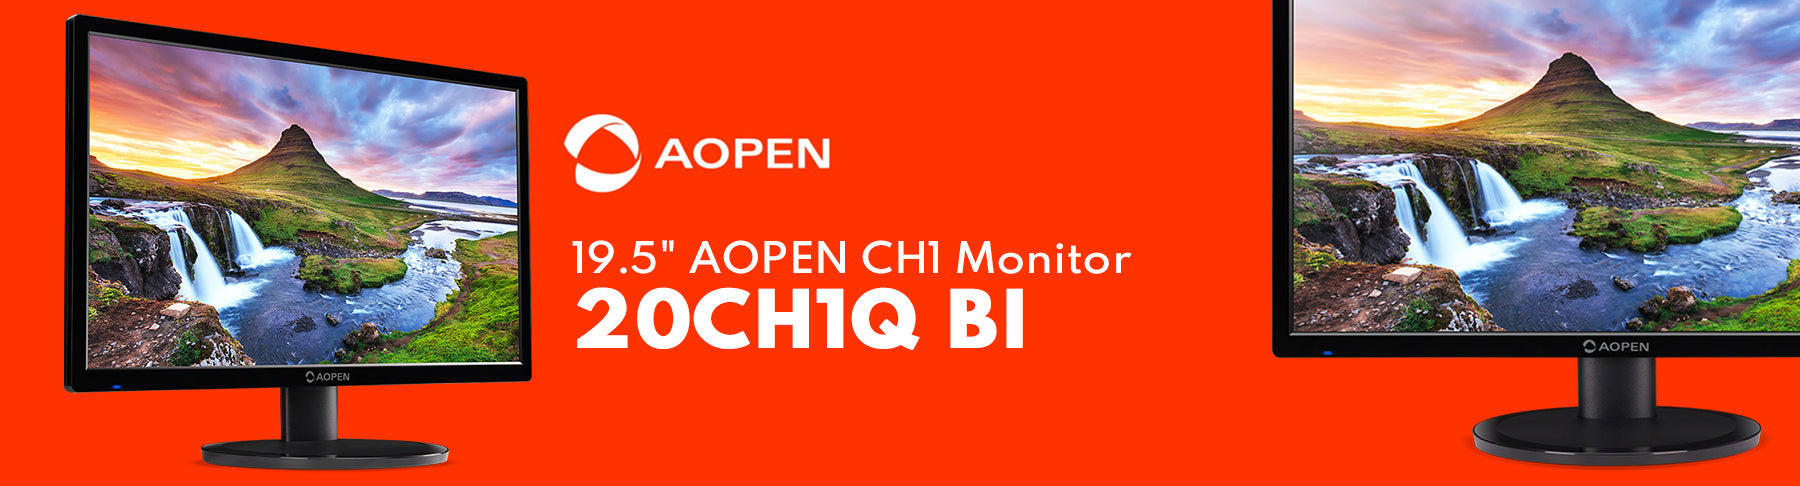 Acer Aopen 19.5